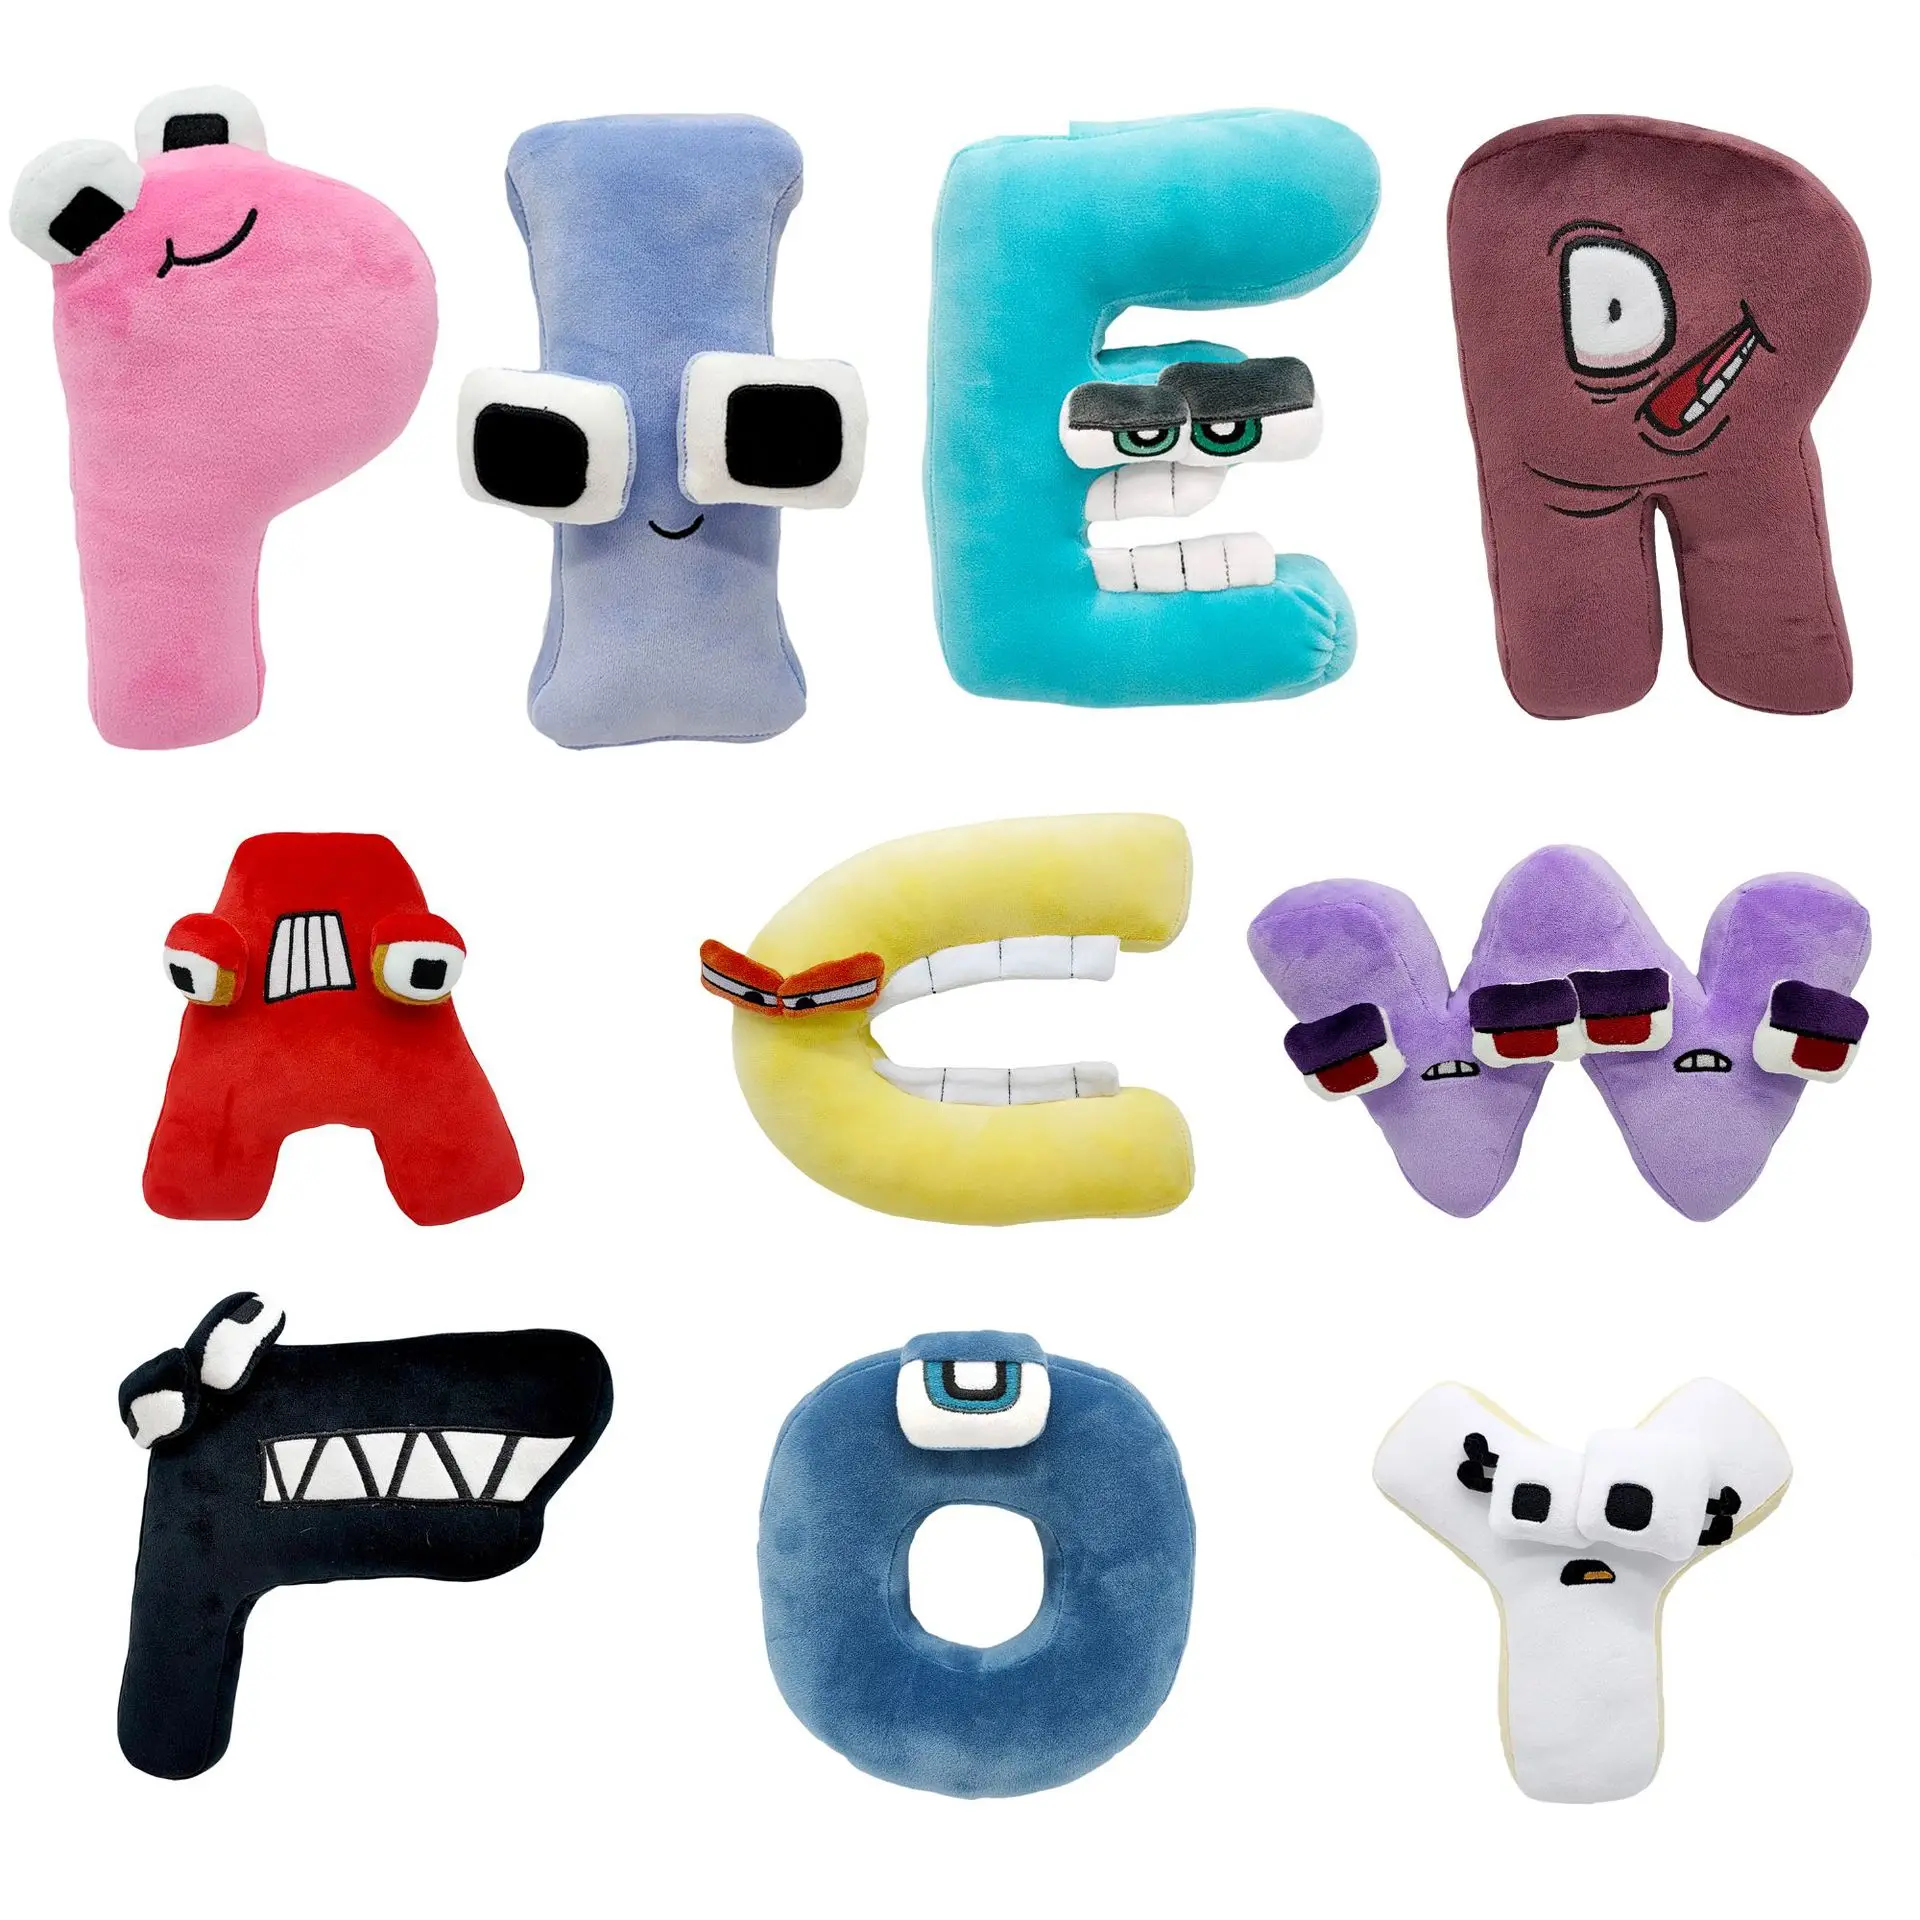 Alphabet Lore But are Stuffed Animal Plush Toy Plushy Doll Toys Kids Gifts